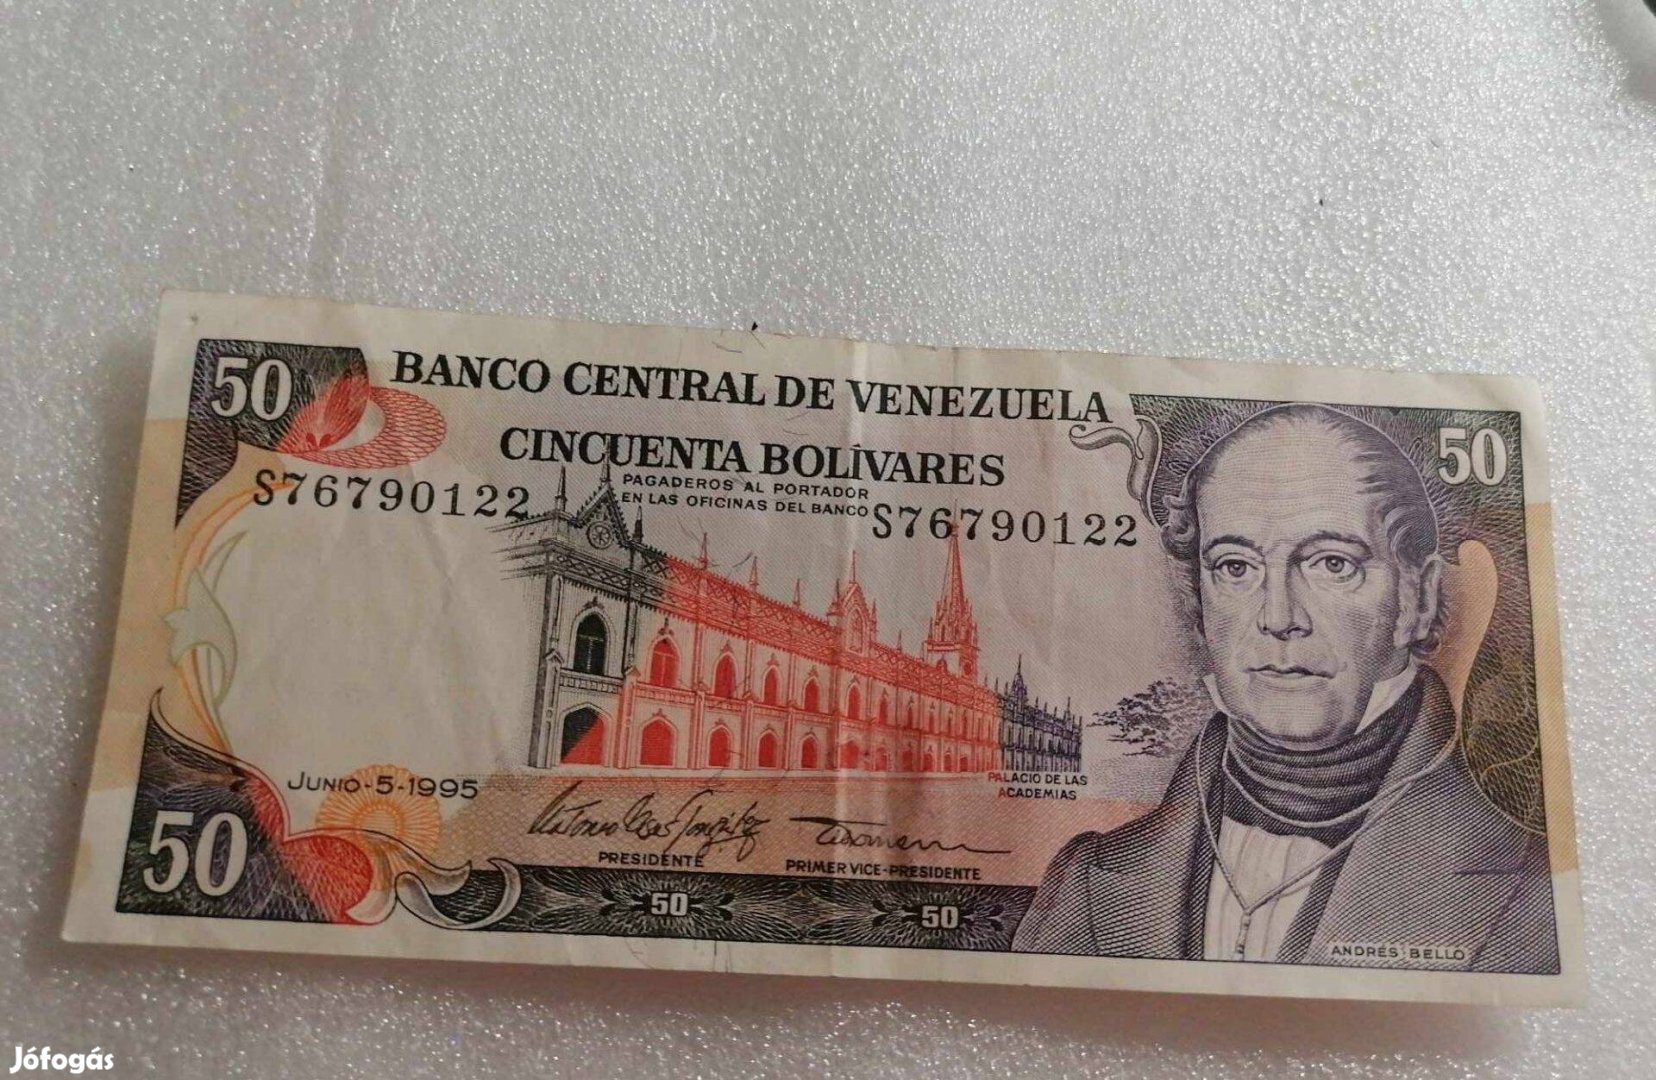 1995 / 50 Bolívares Venezuela